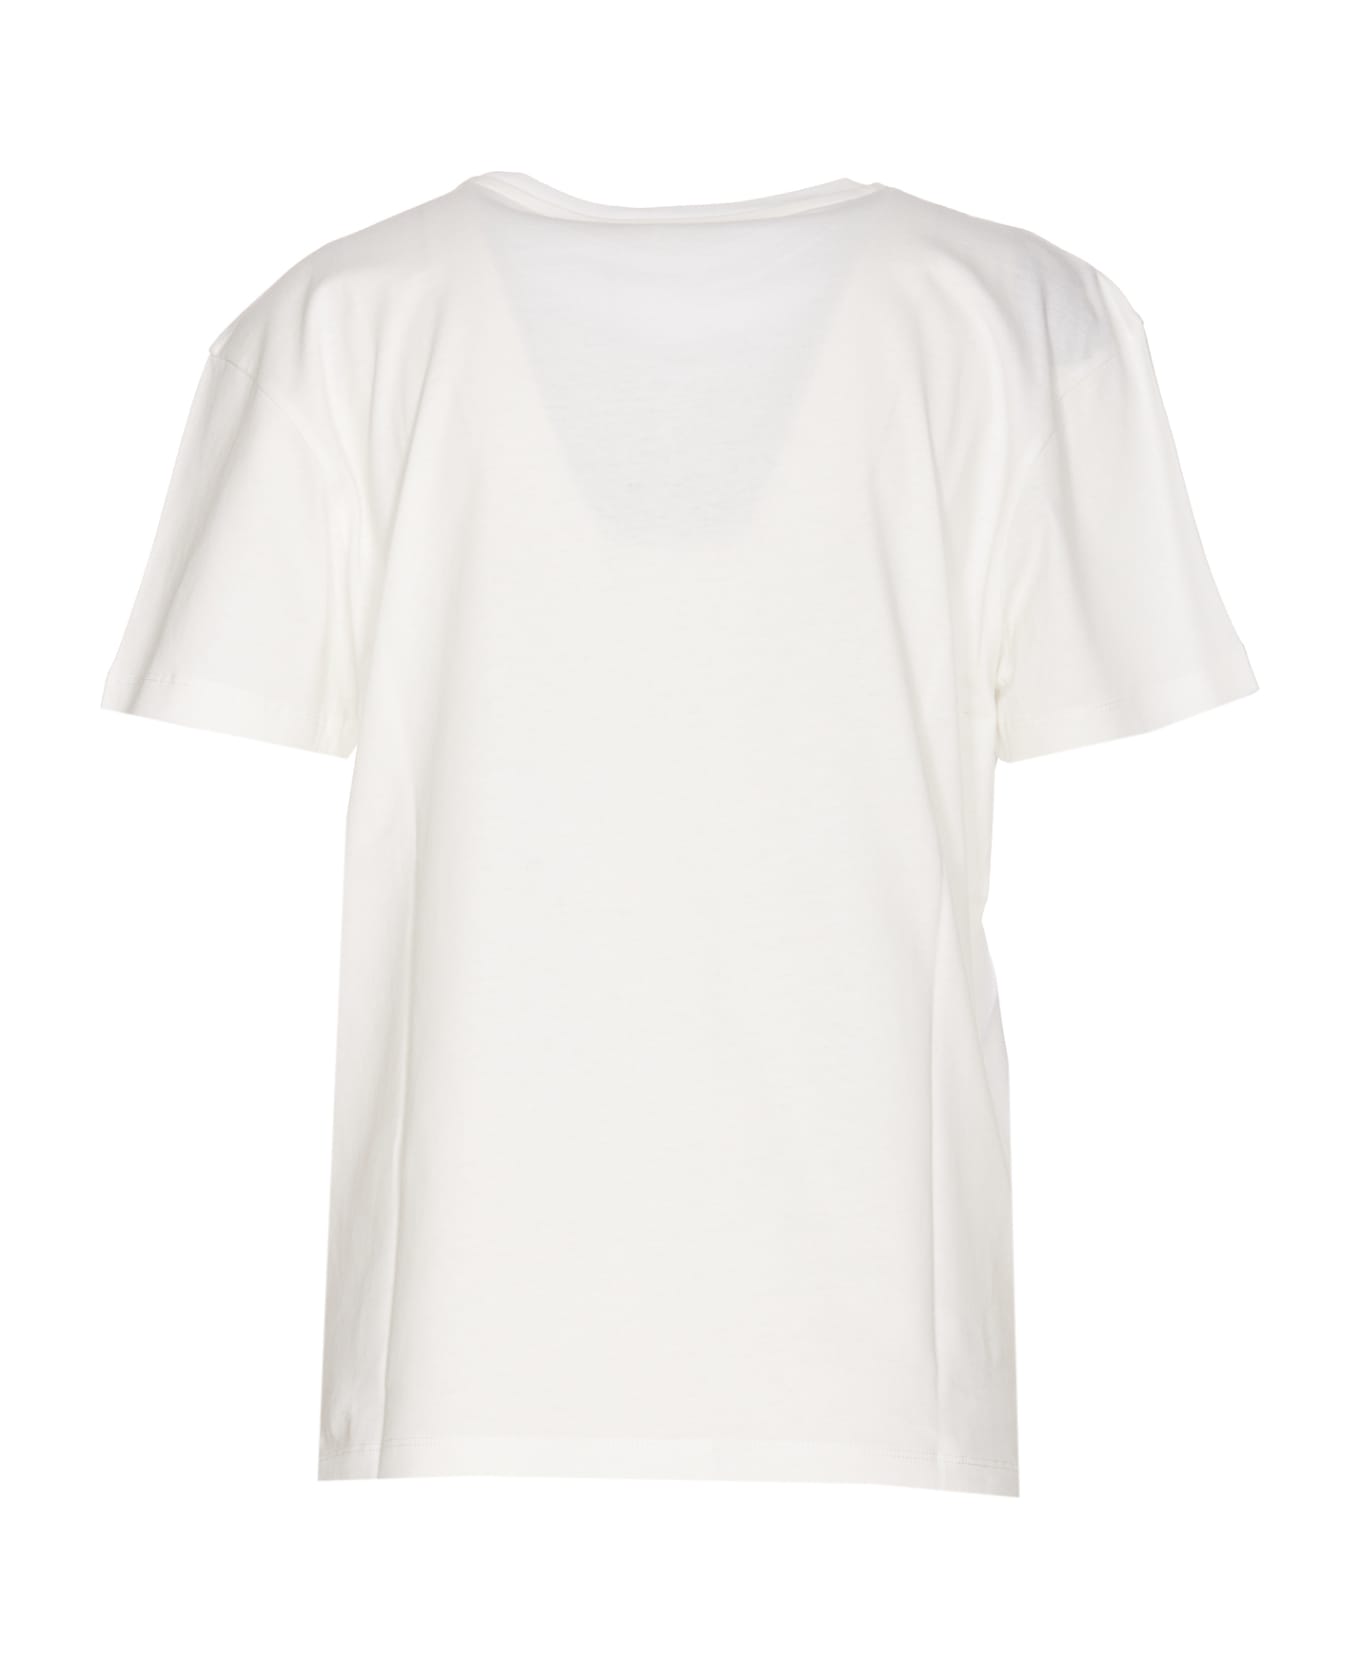 TwinSet T-shirt - White Tシャツ